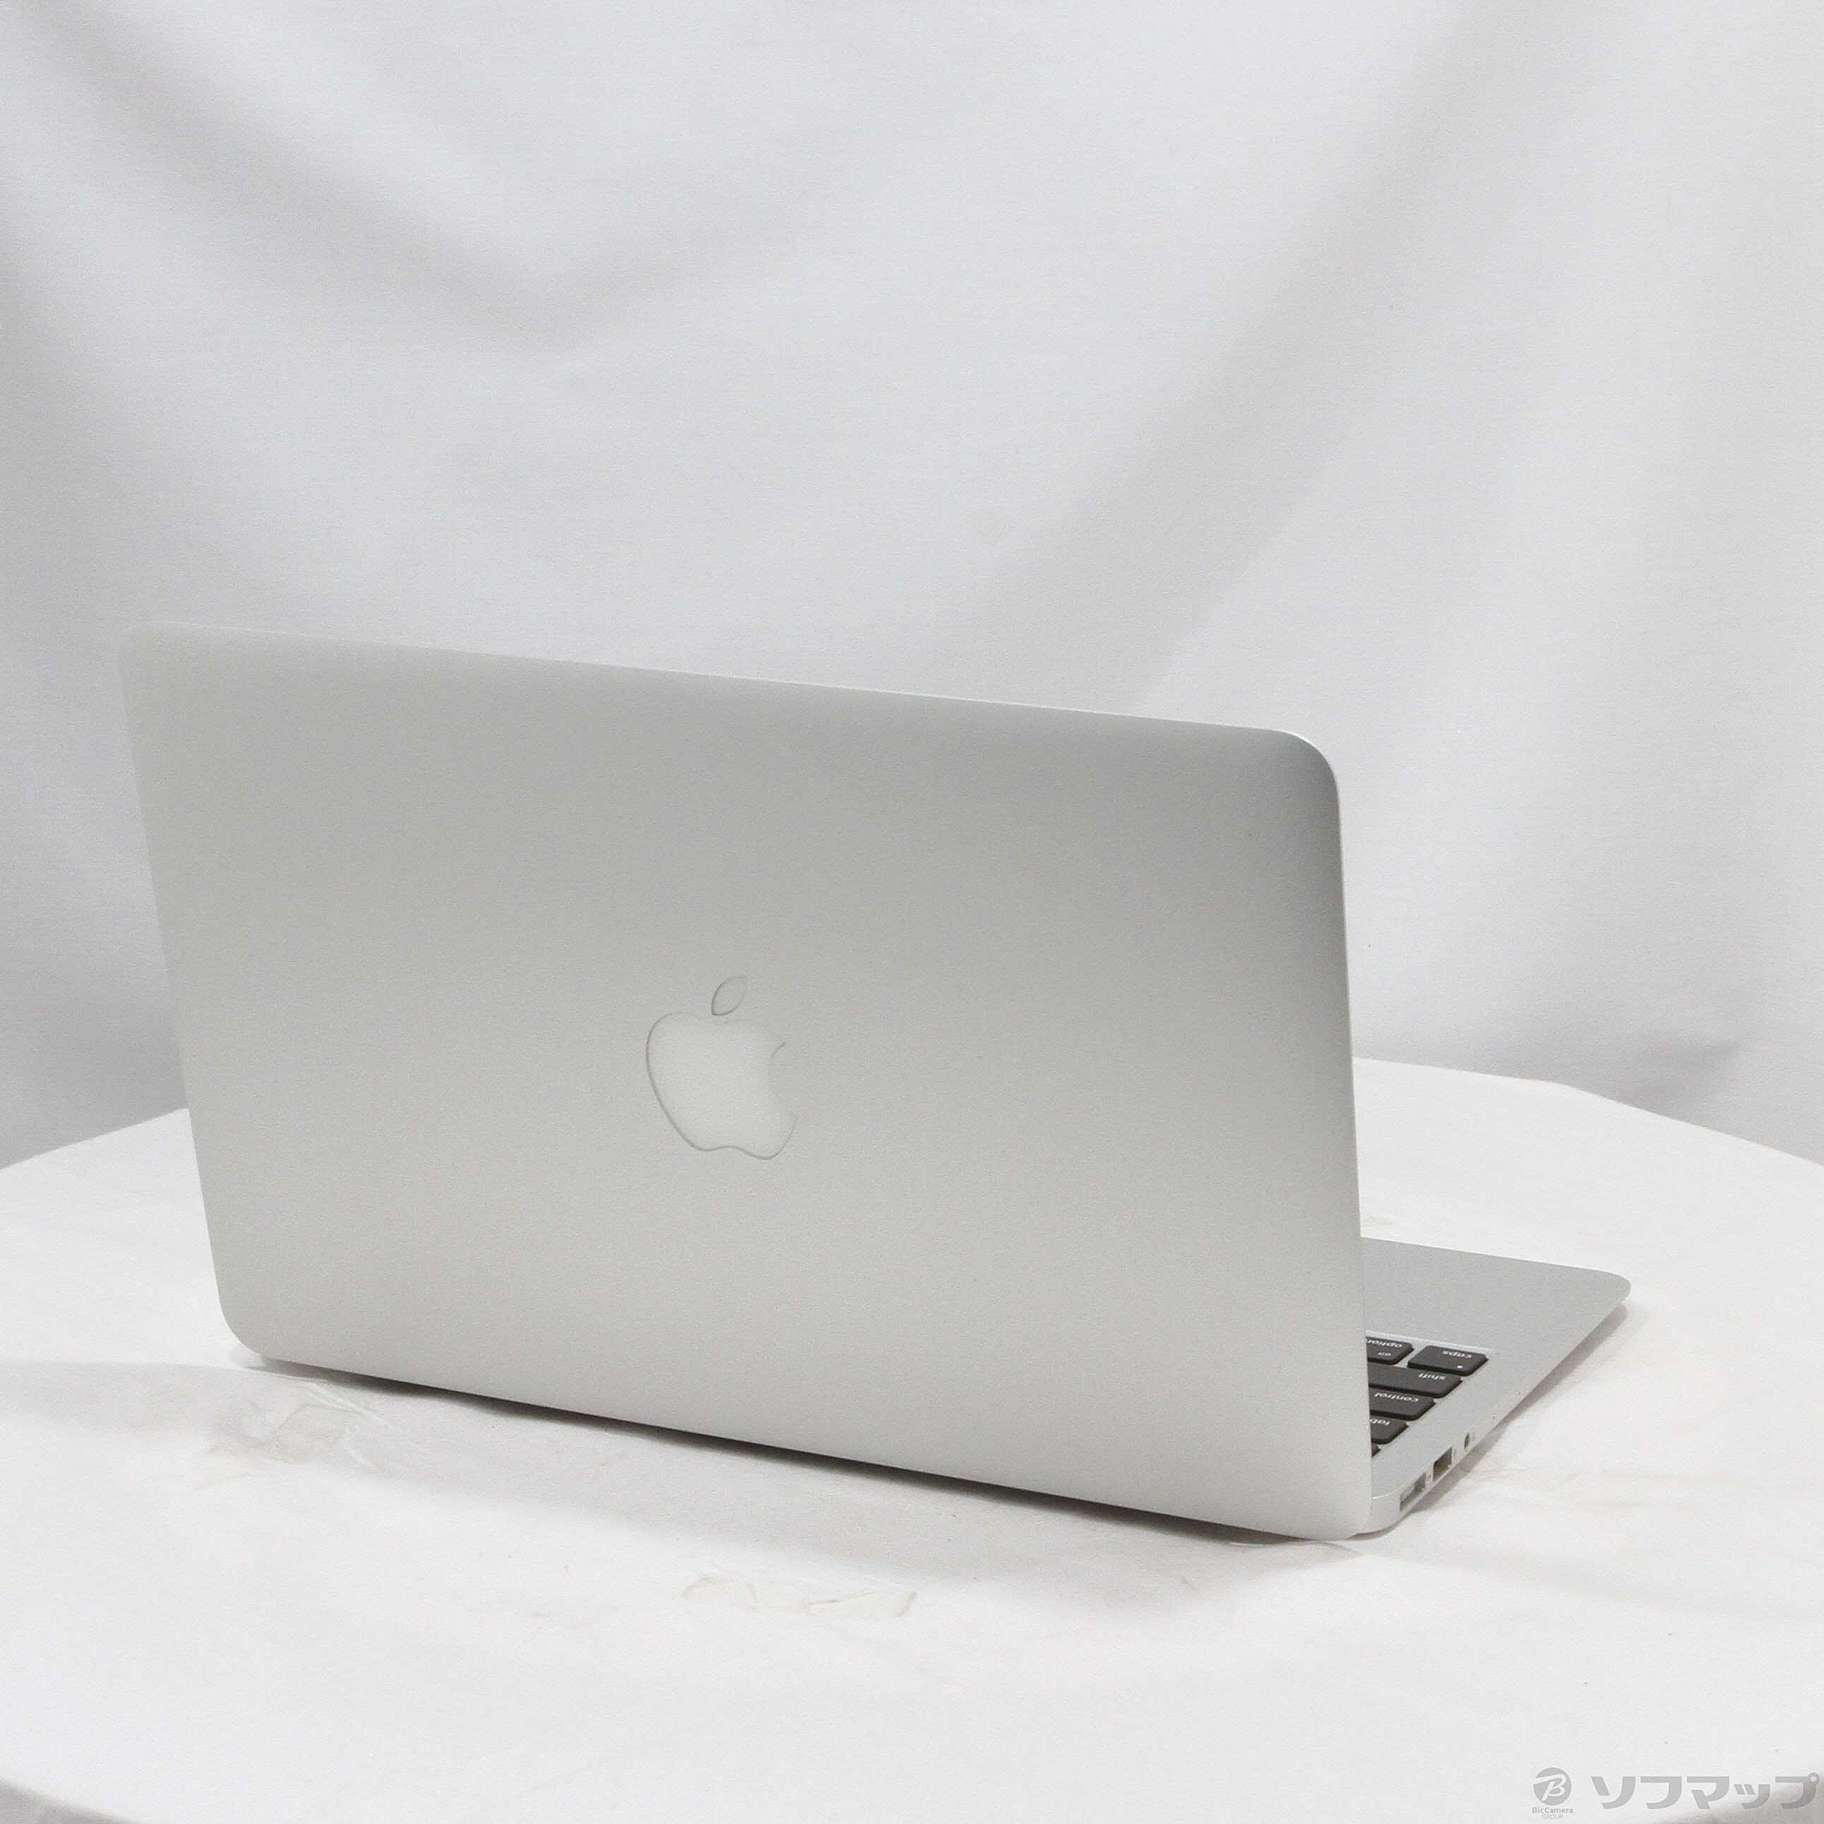 中古品〕 MacBook Air 11.6-inch Early 2014 MD711J／B Core_i5 1.4GHz 